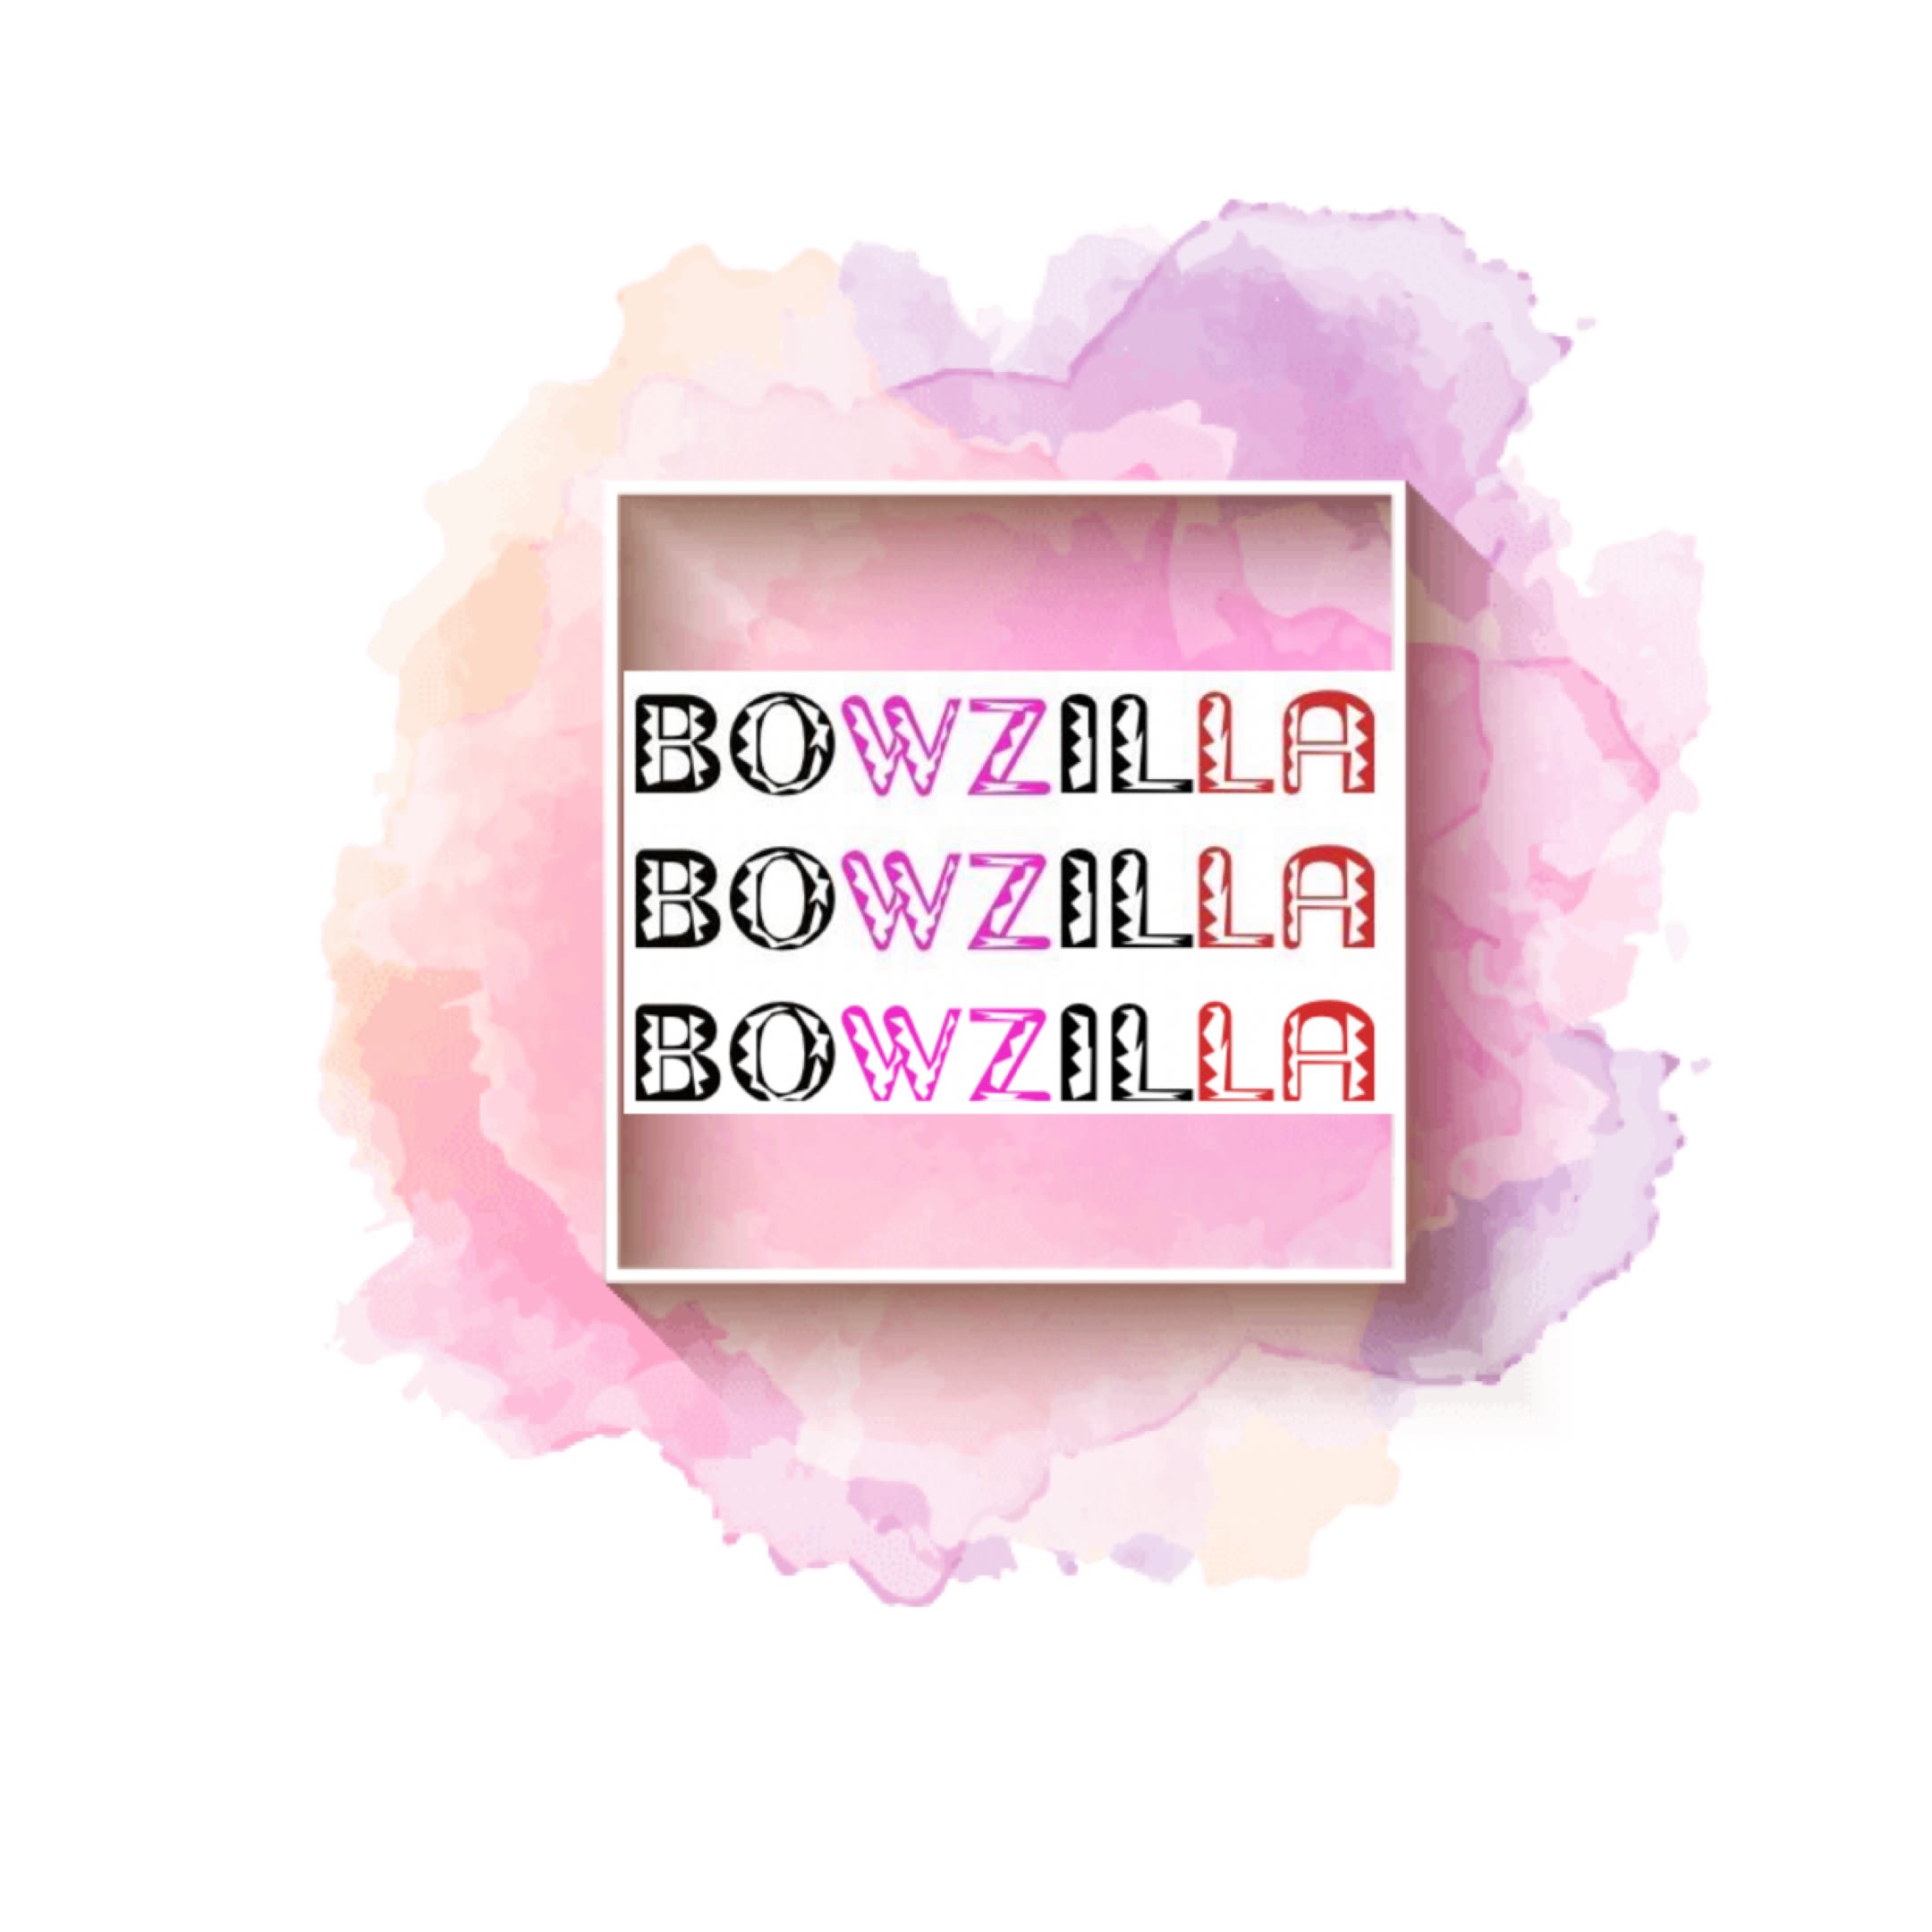 Bowzilla